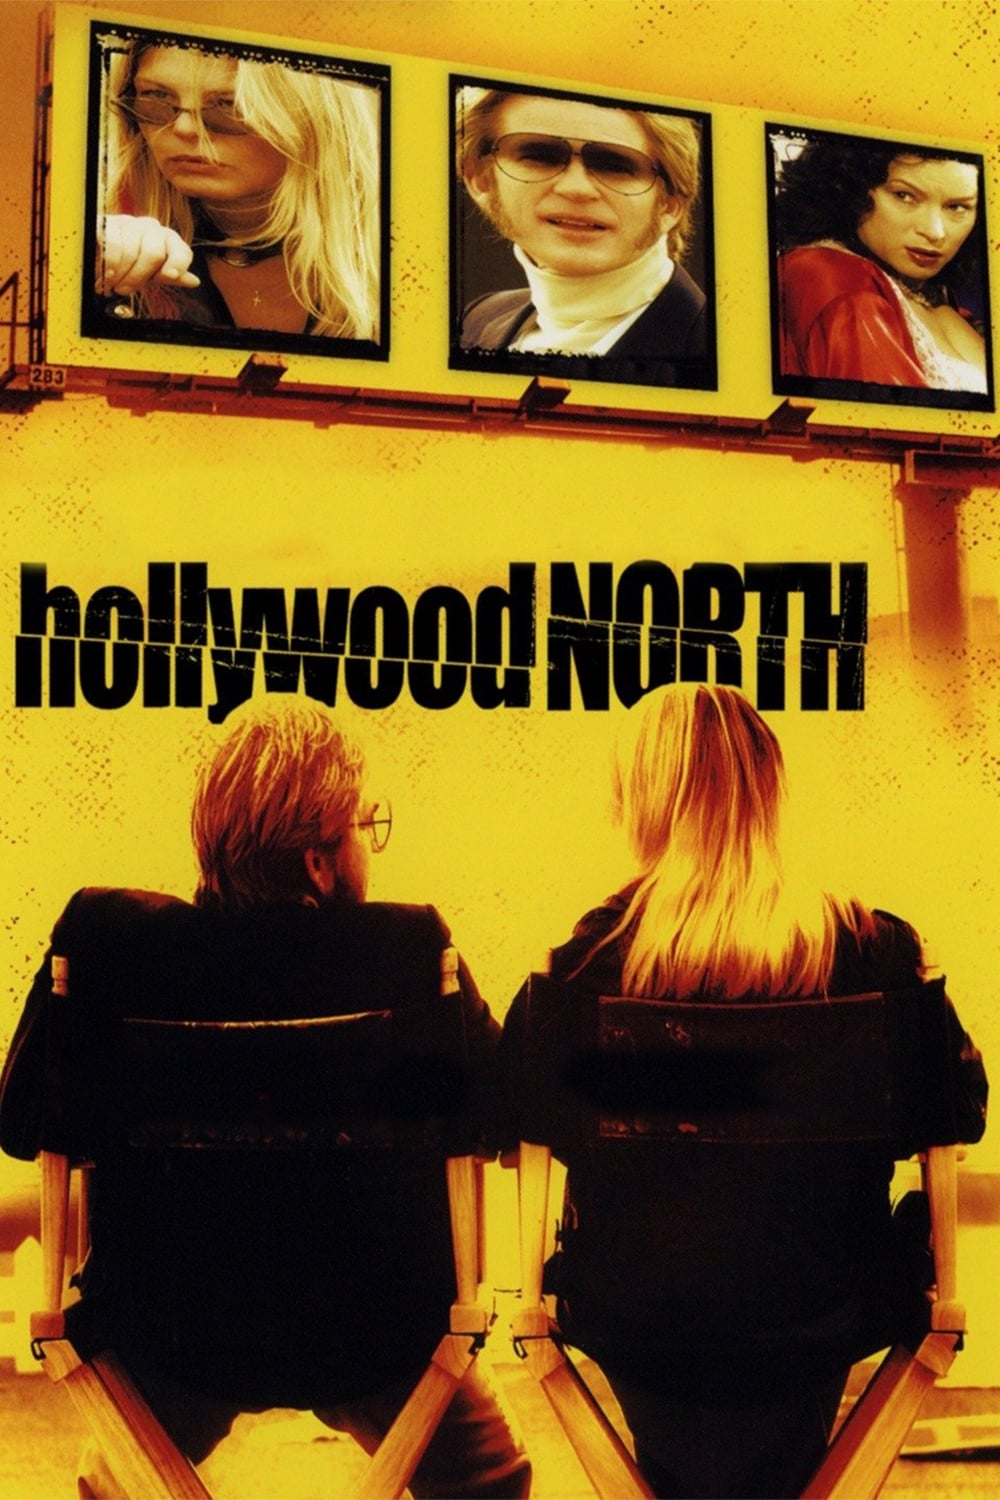 Hollywood North (2004)